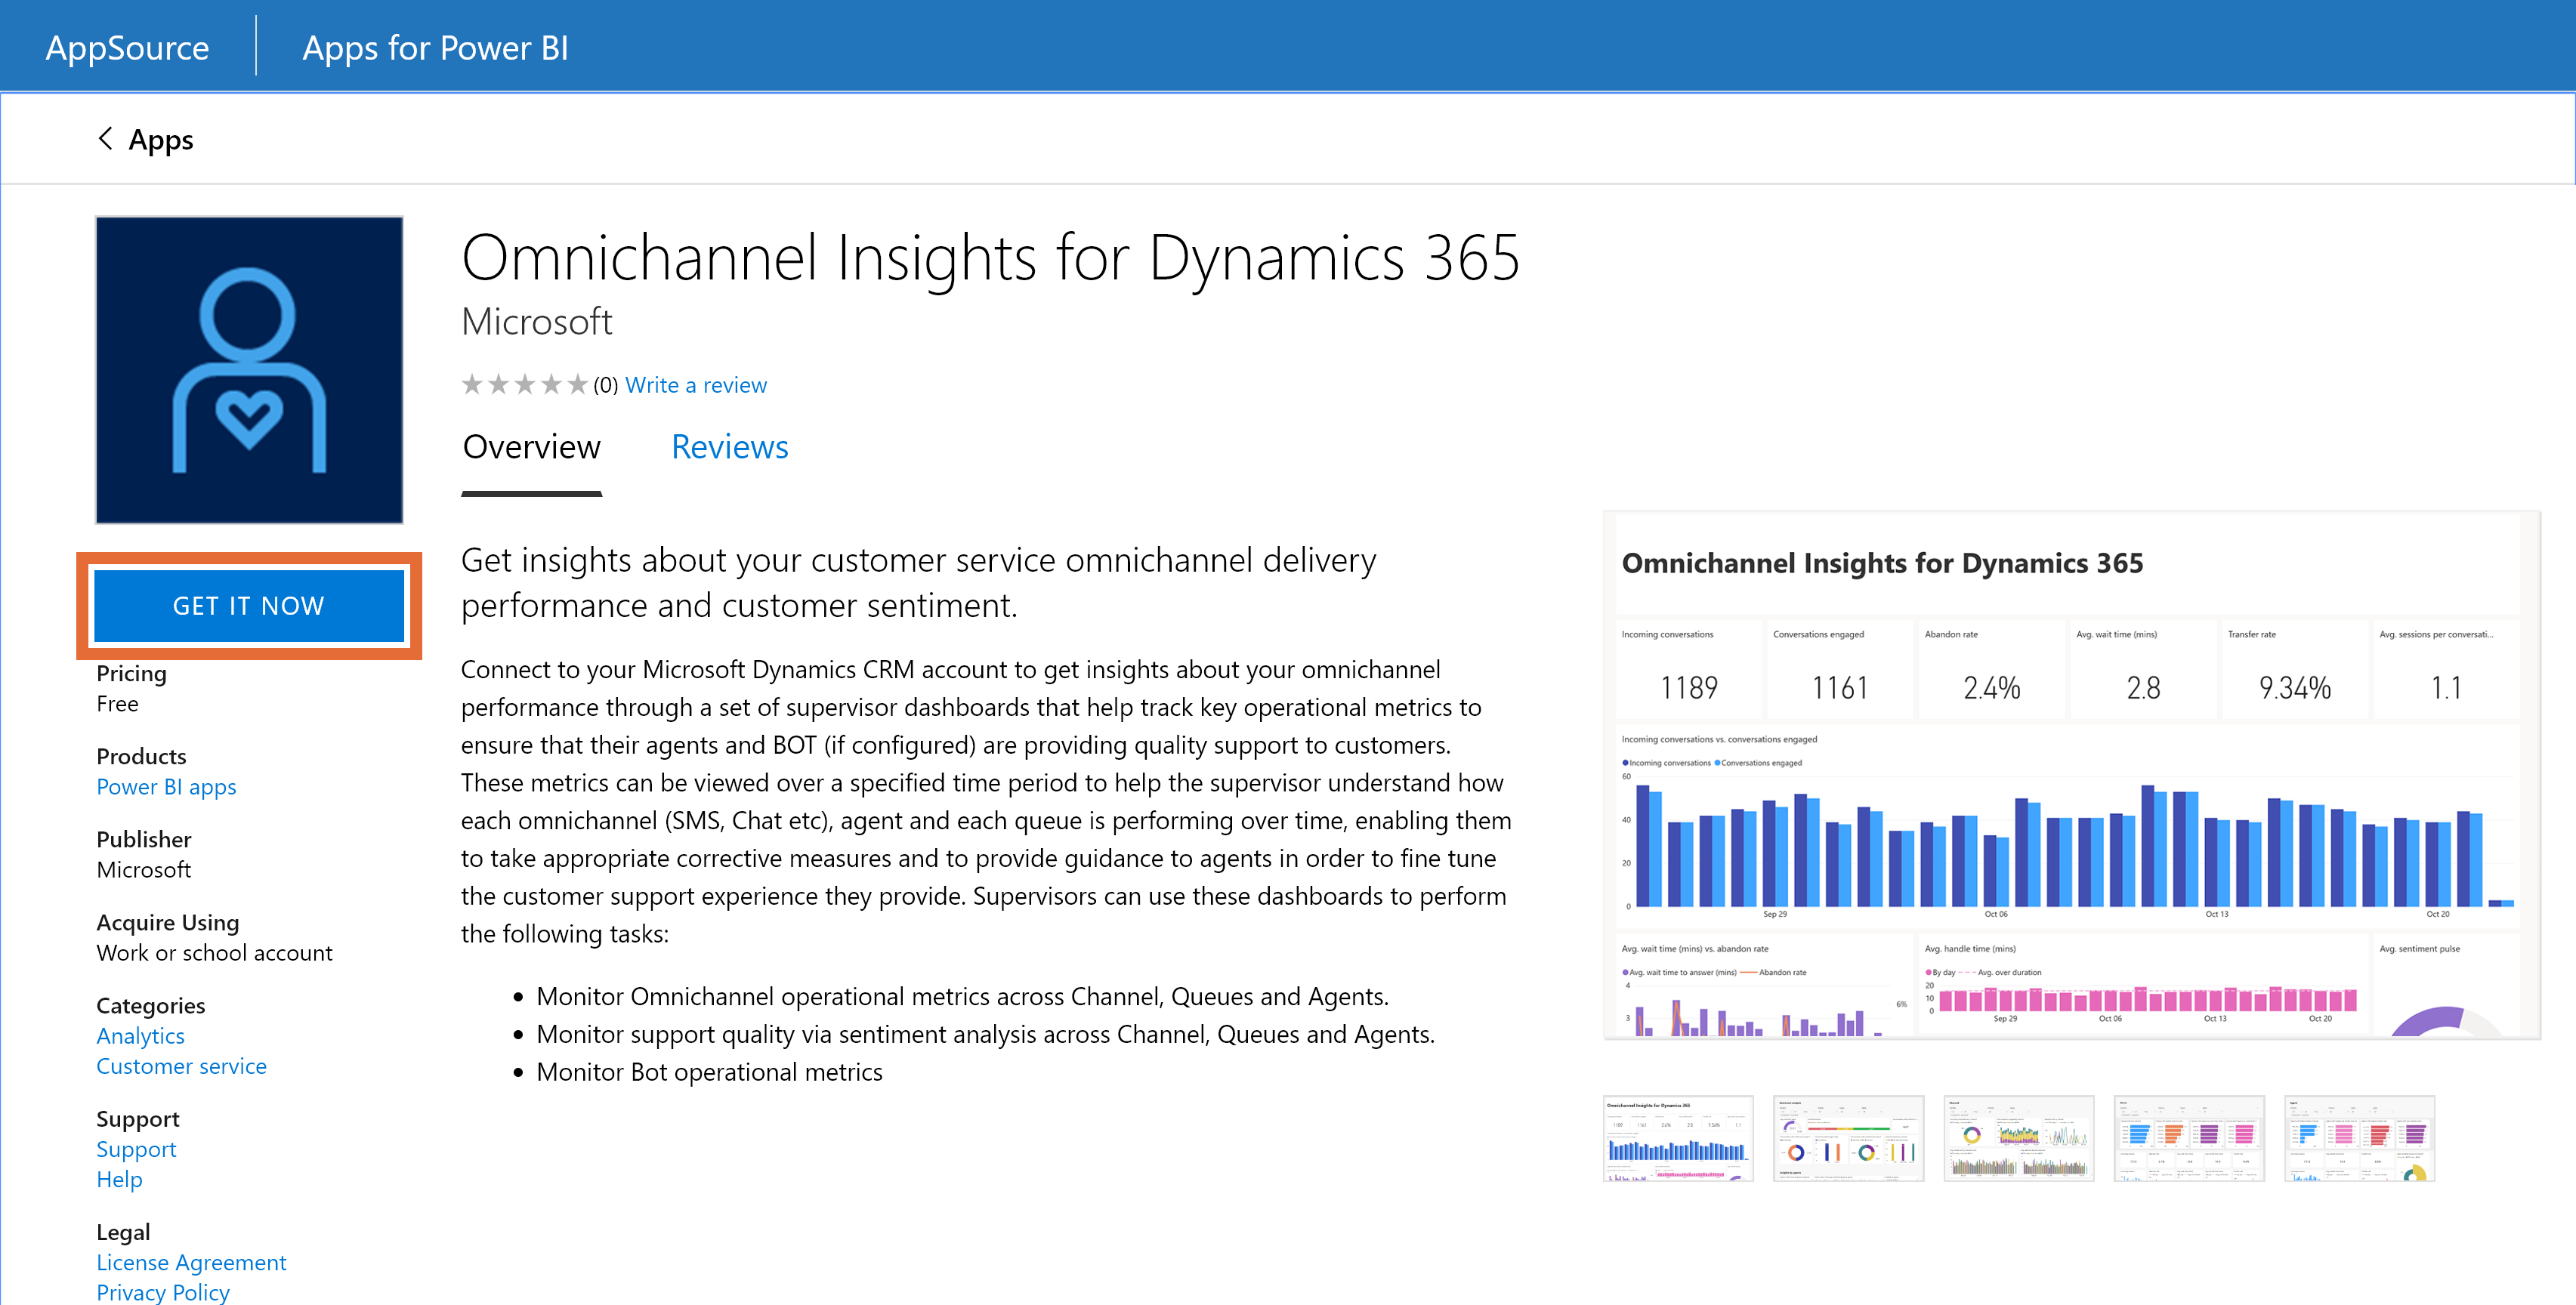 Omnichannel Insights for Dynamics 365 app installation.